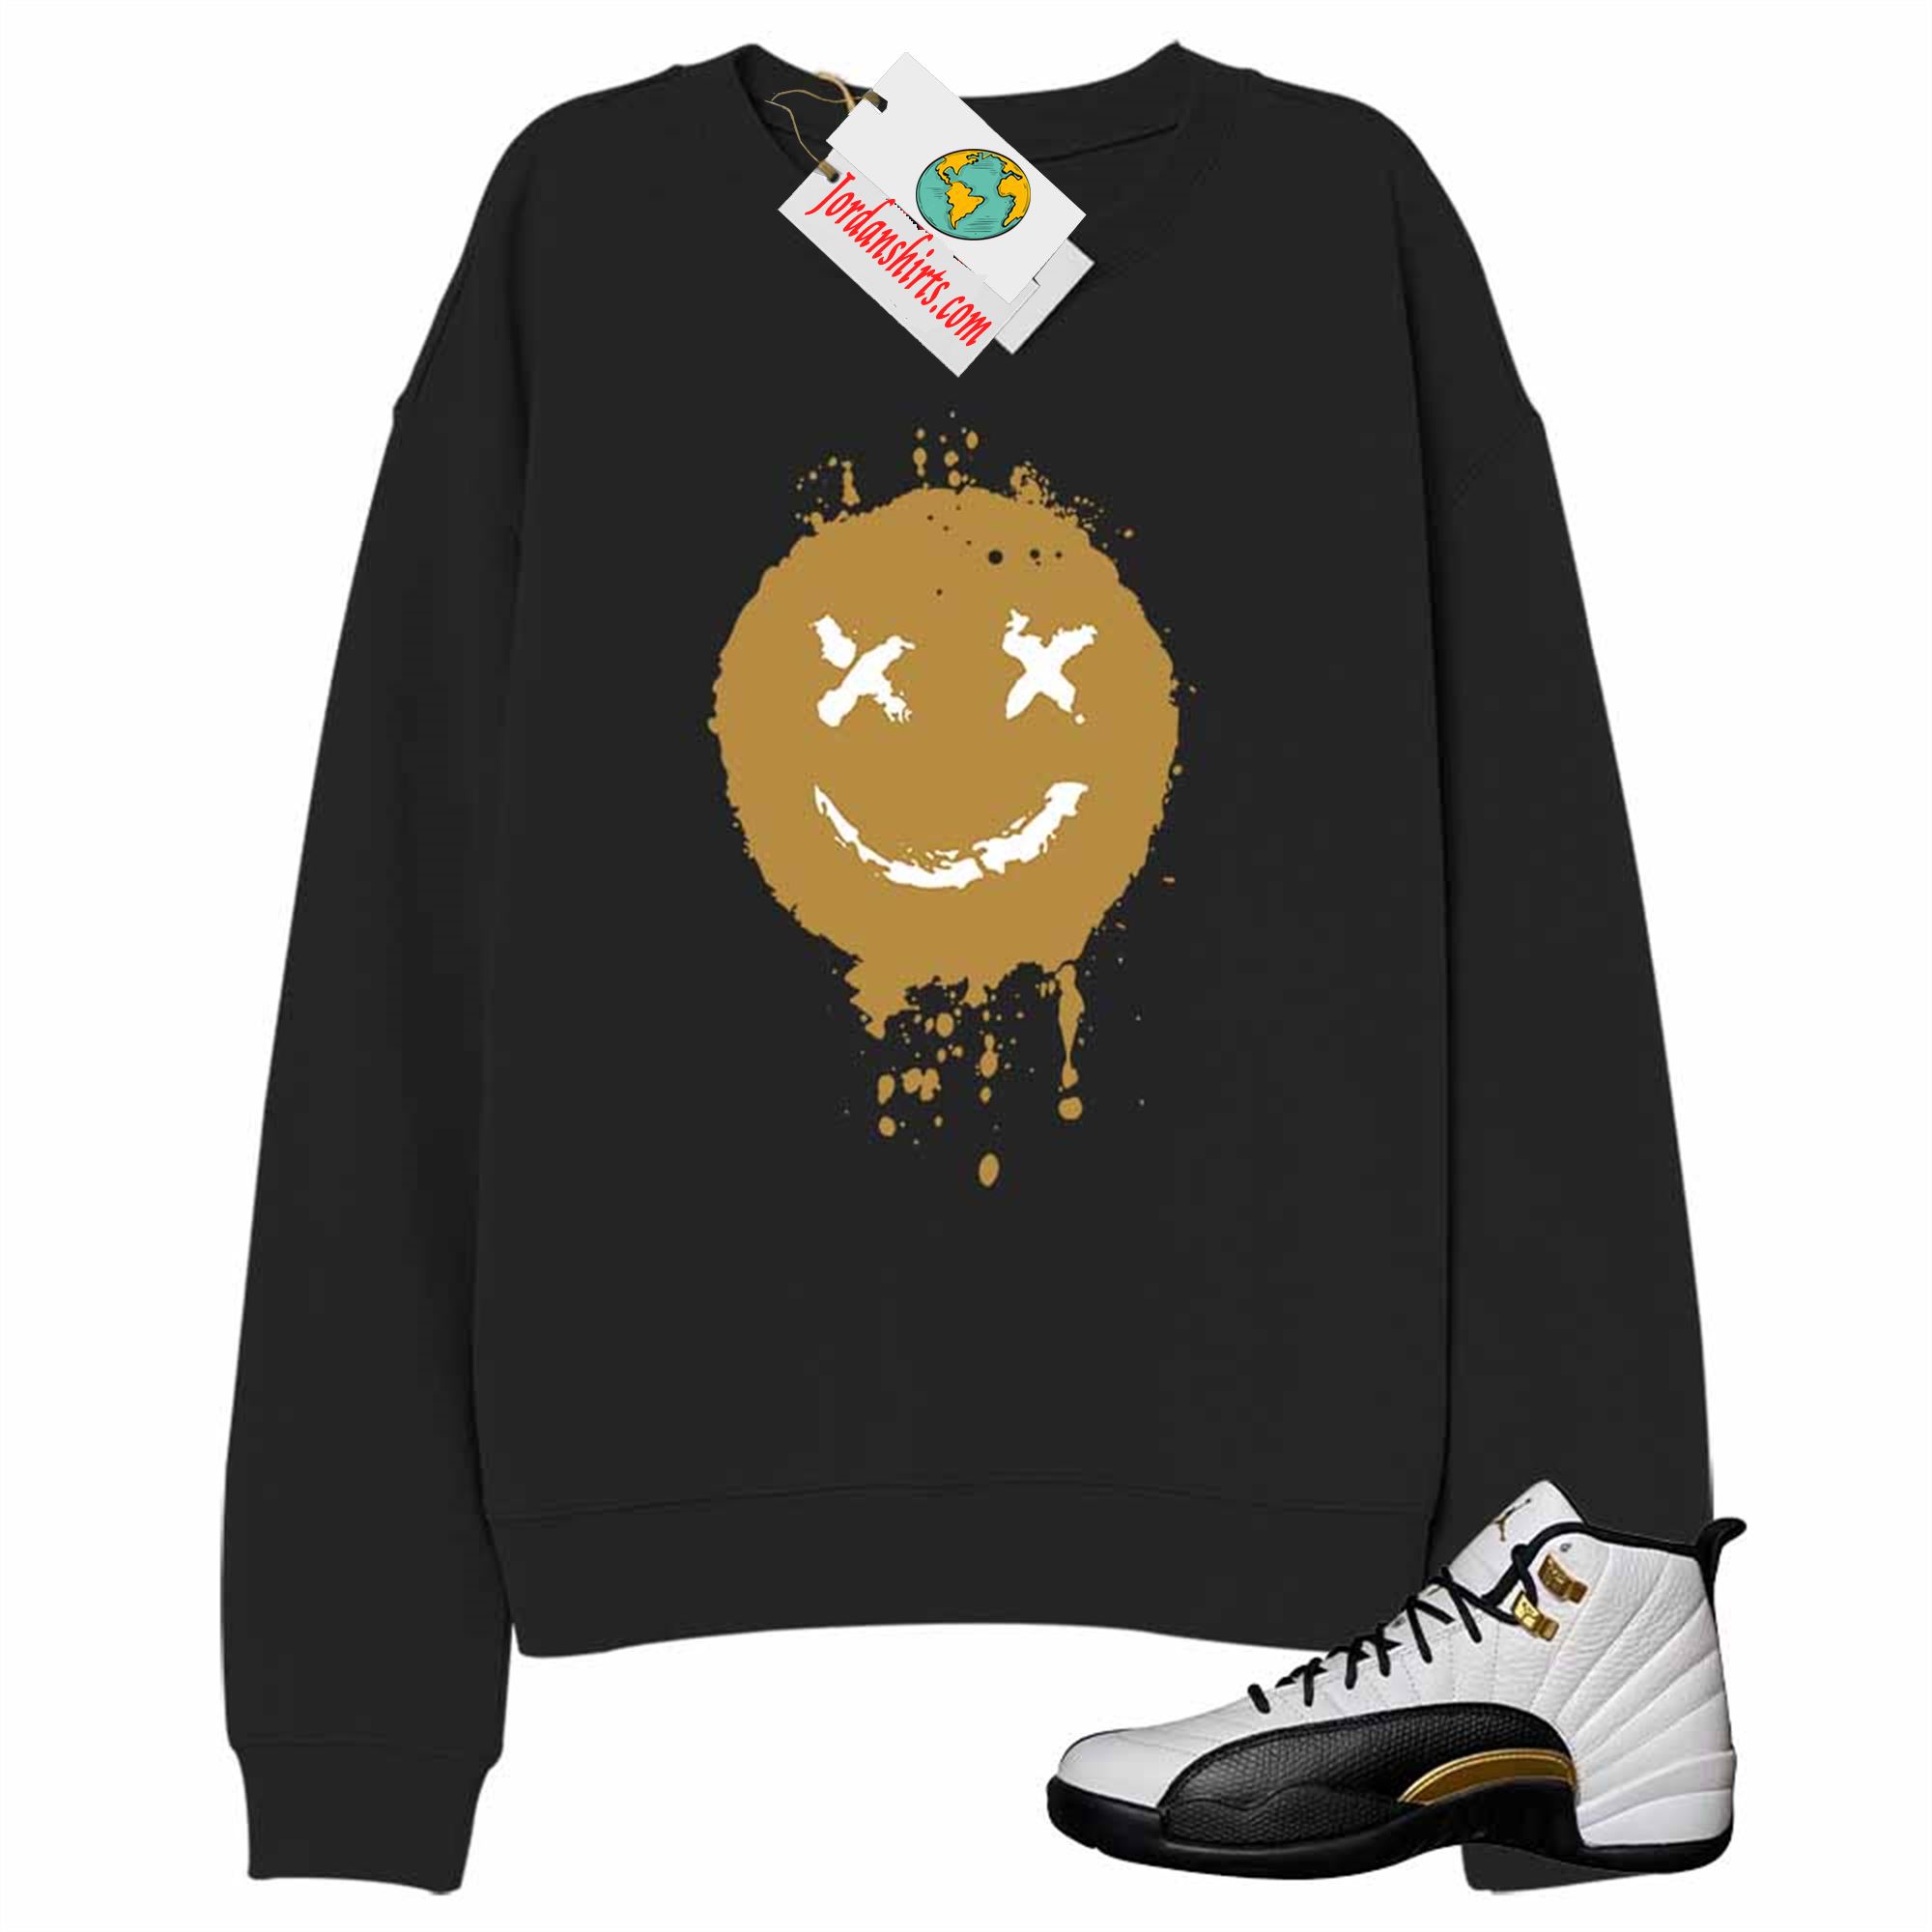 Jordan 12 Sweatshirt, Smile Happy Face Black Sweatshirt Air Jordan 12 Royalty 12s Full Size Up To 5xl